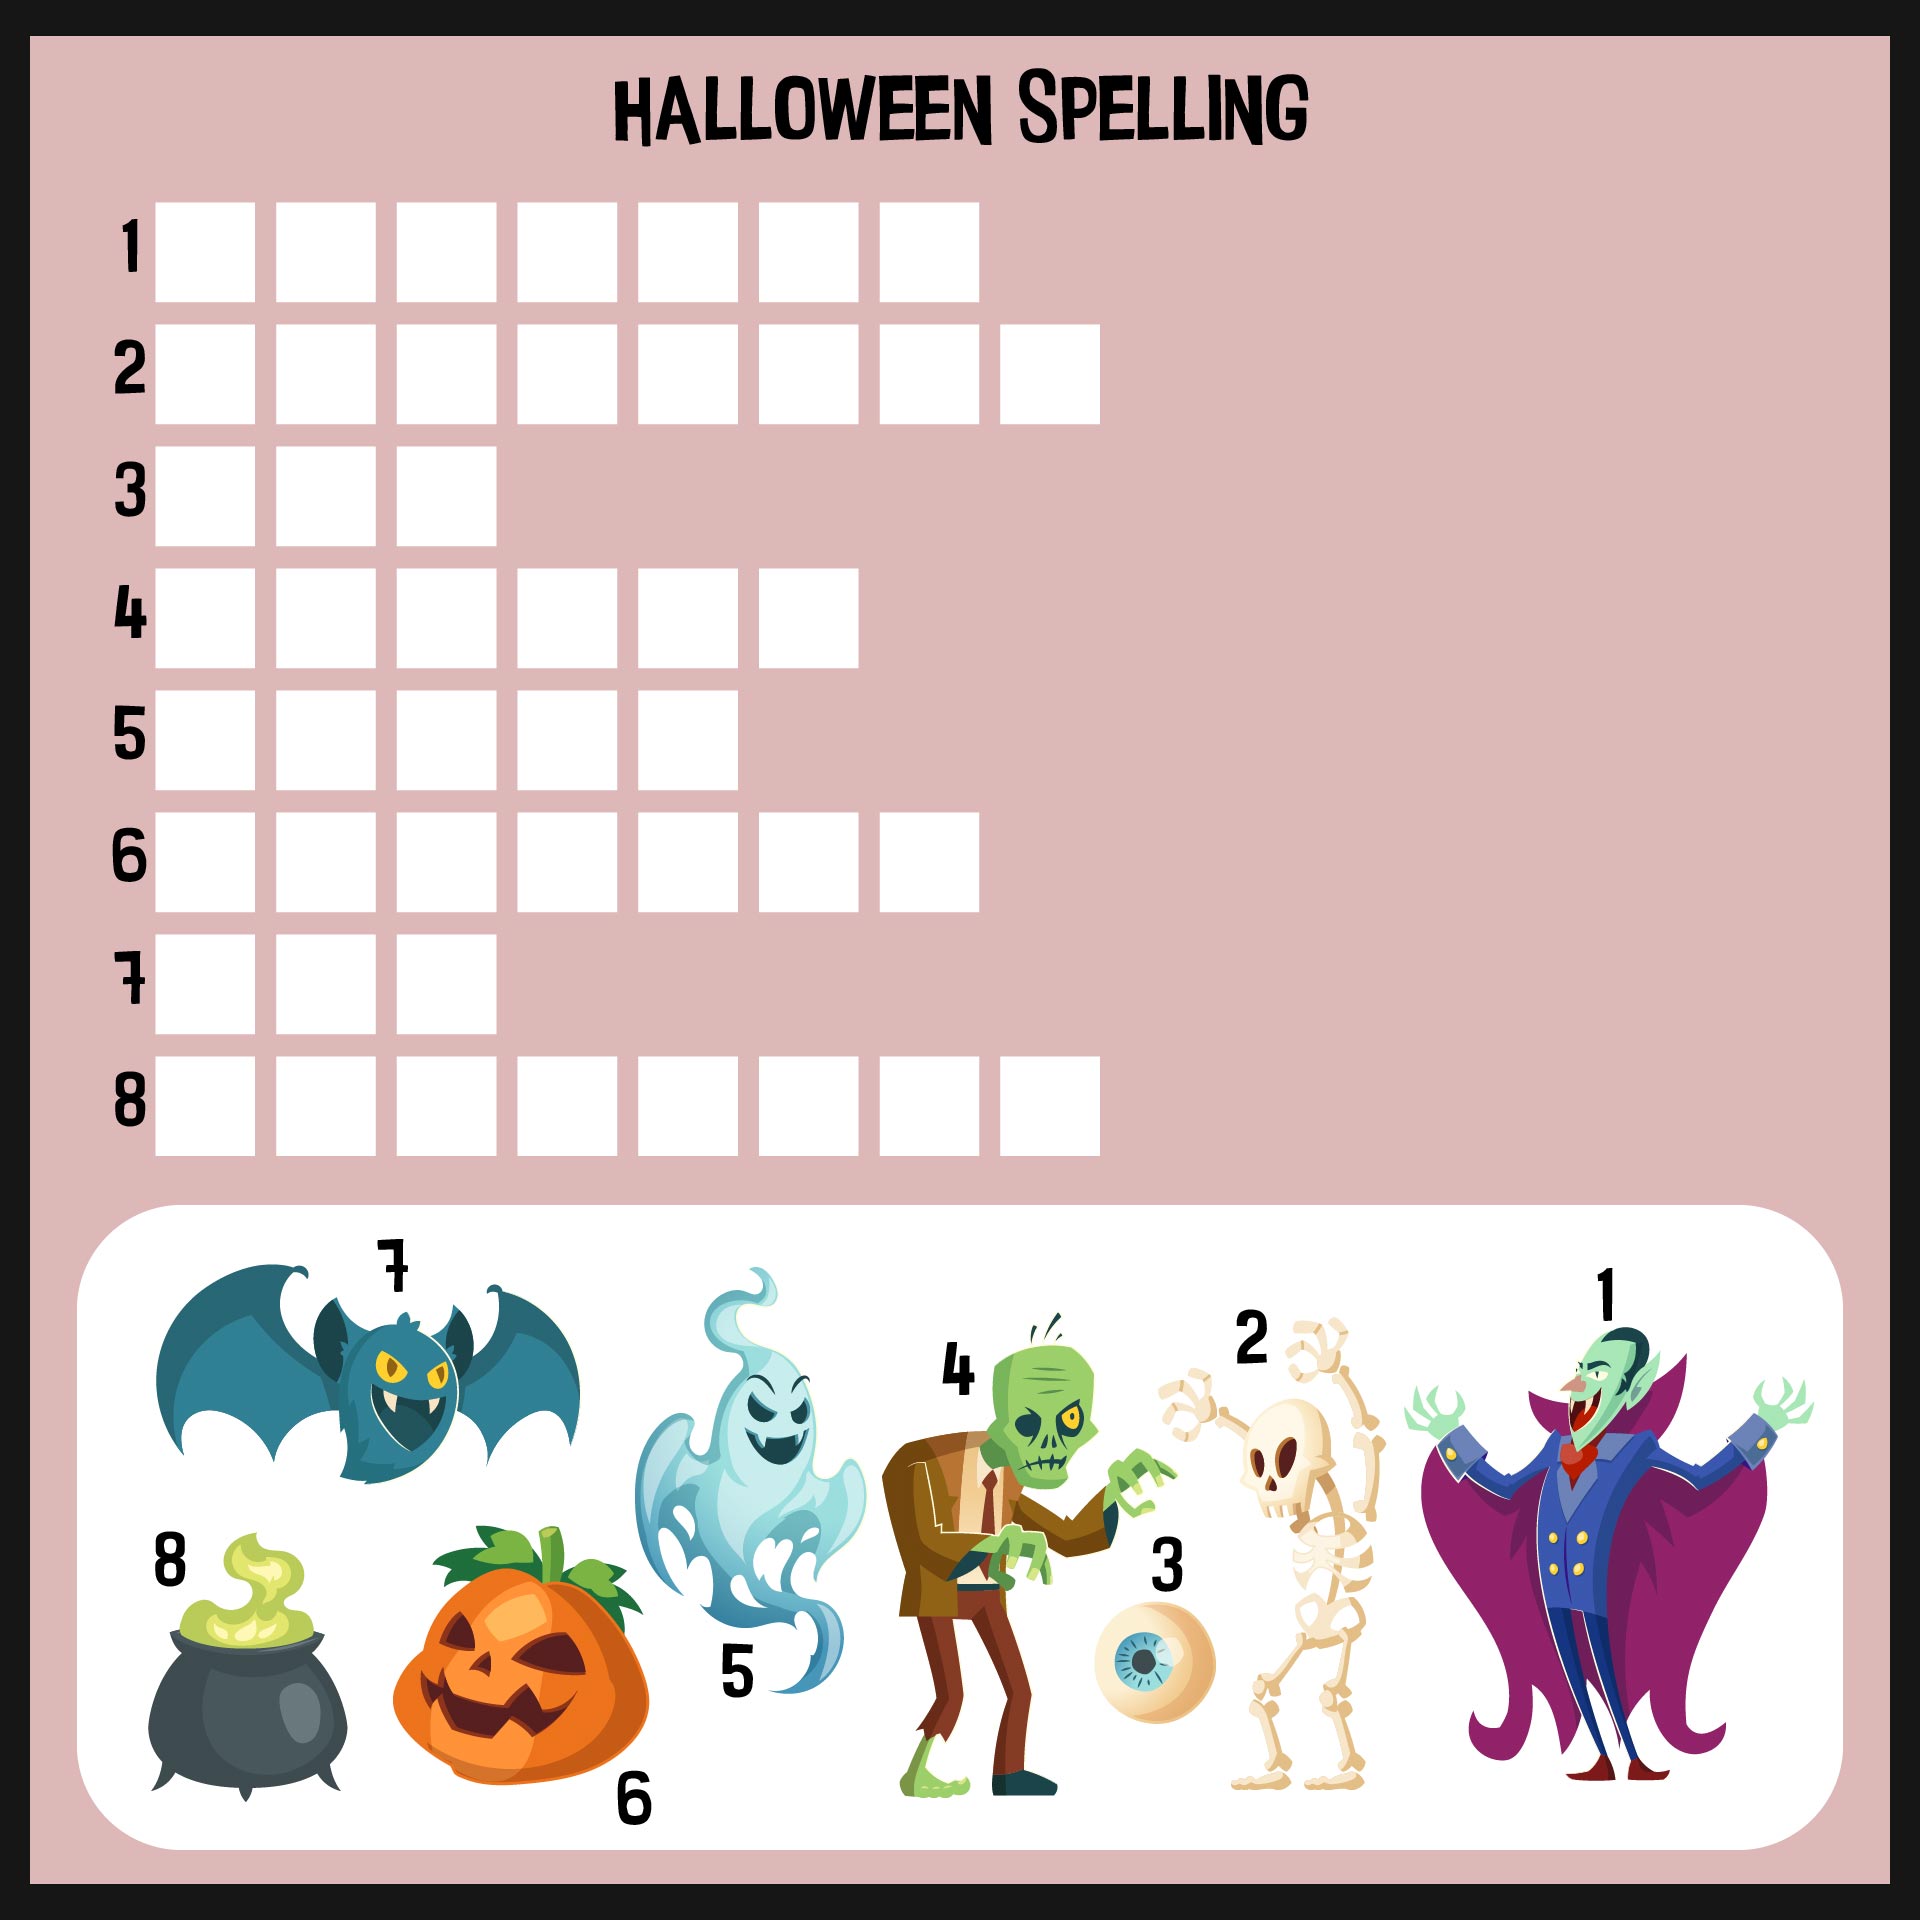 Kindergarten Halloween Spelling Worksheet Printable